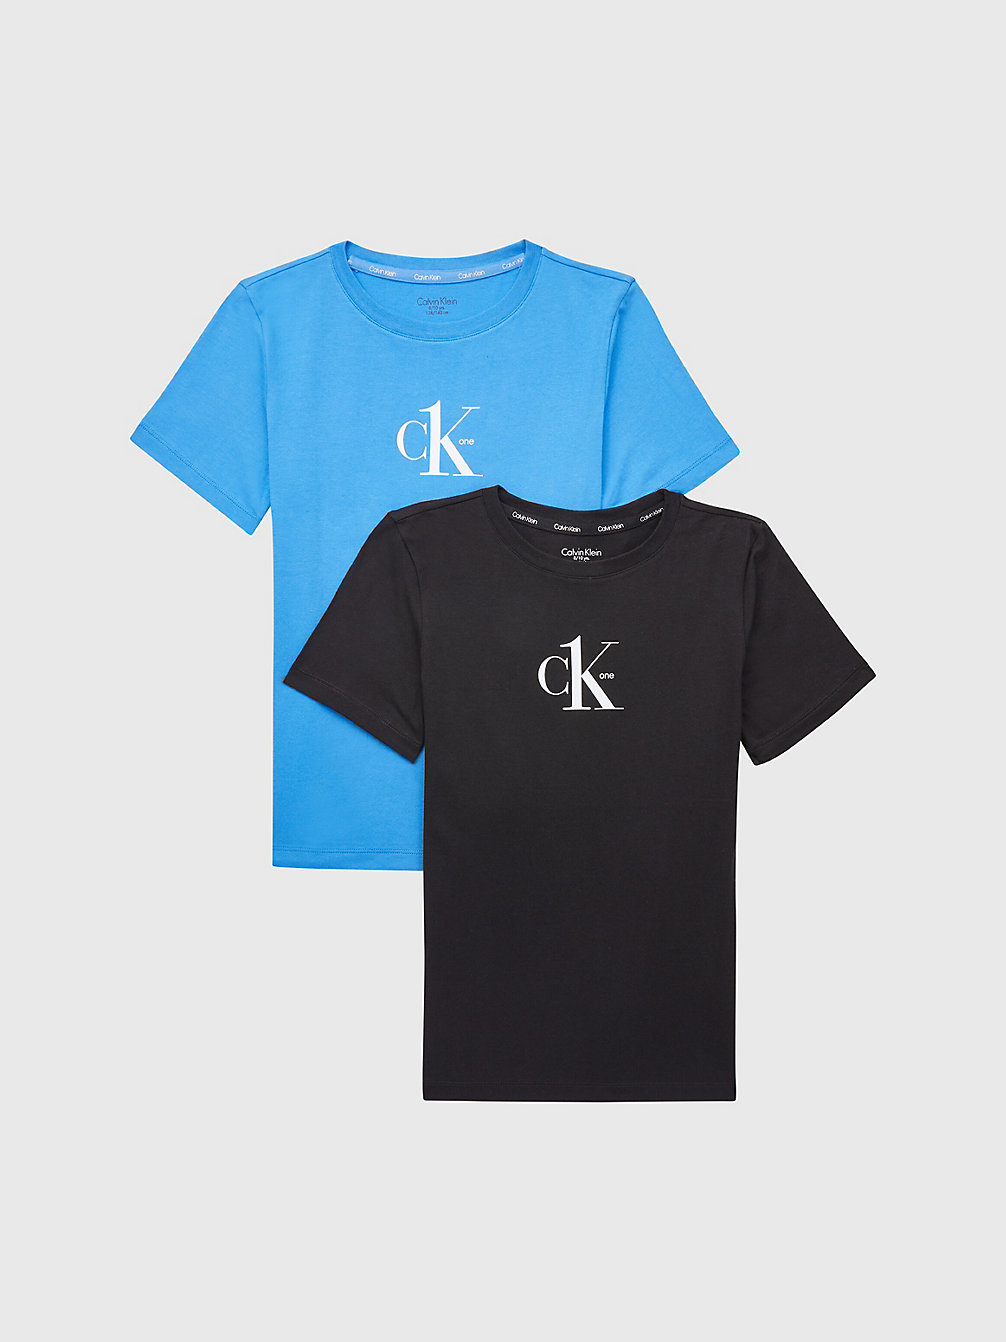 ELECTRICAQUA/PVHBLACK > Комплект футболок для мальчиков 2 шт. - CK One > undefined boys - Calvin Klein